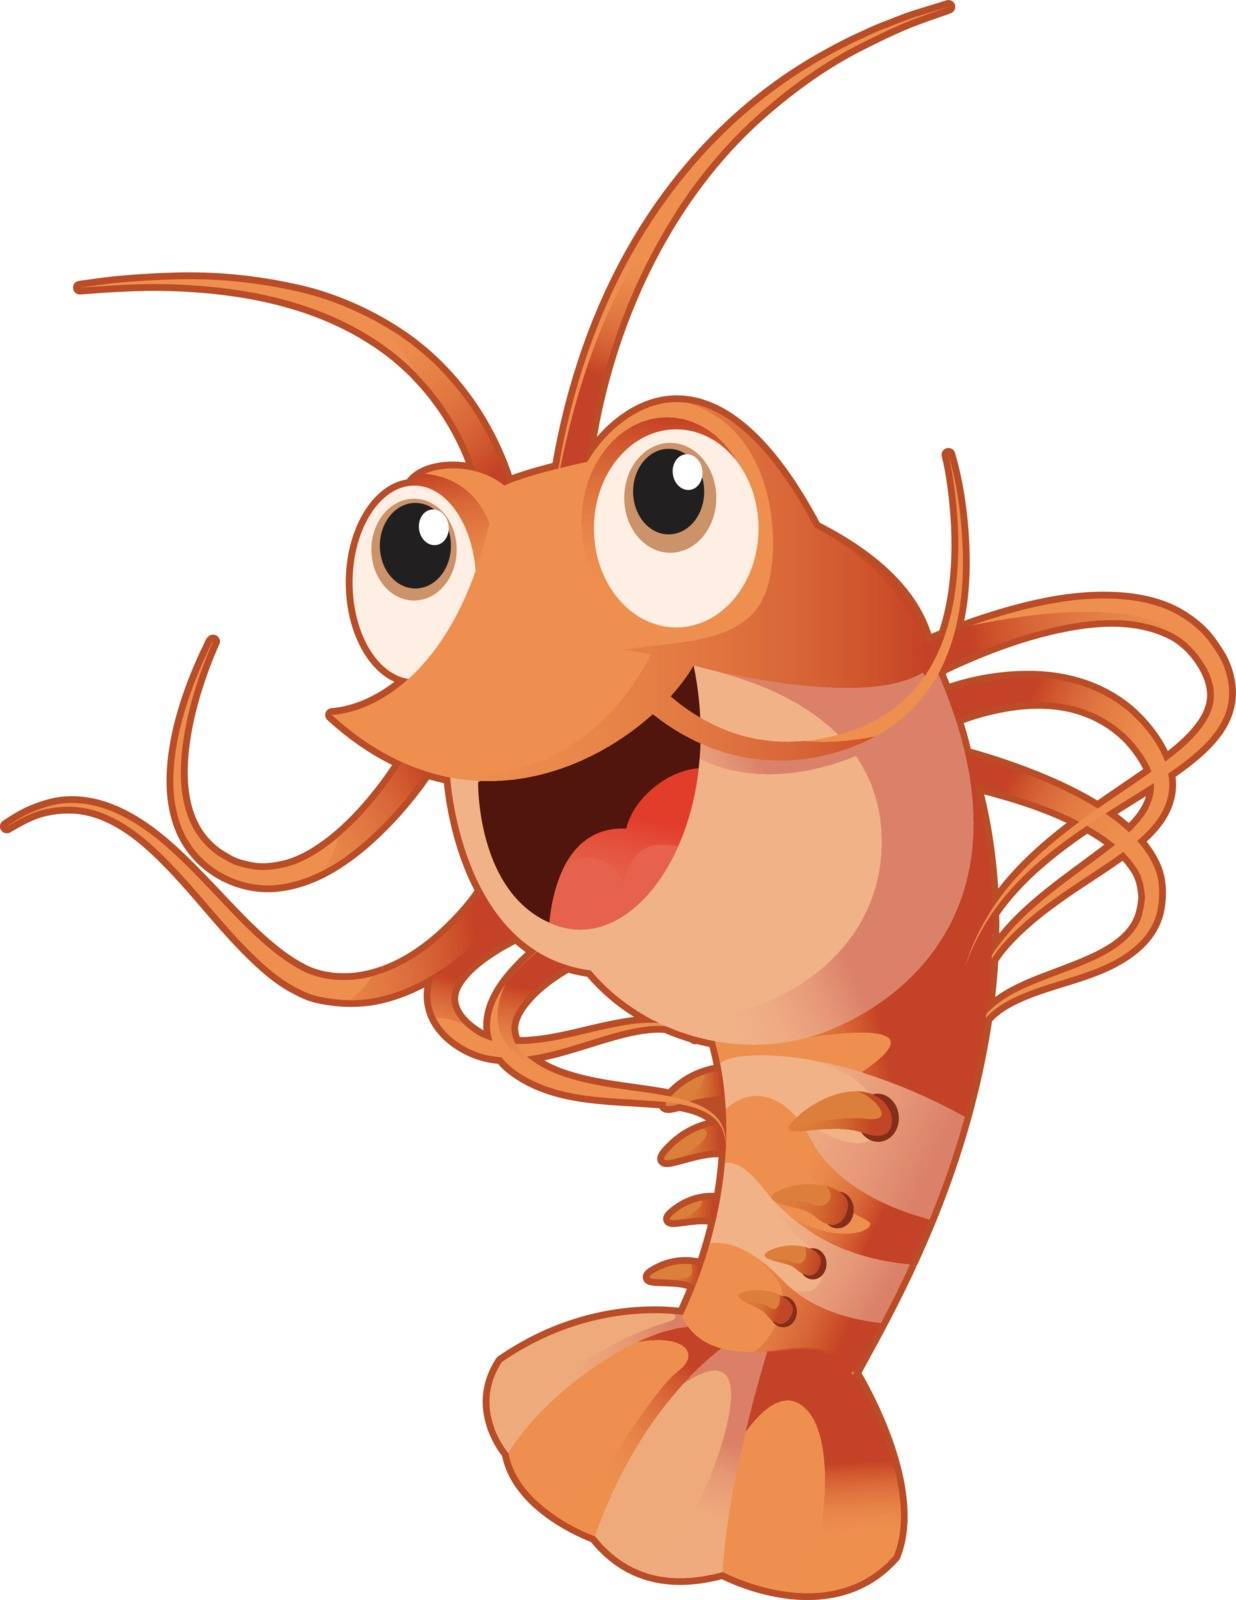 Vector image of a cartoon funny shrimp